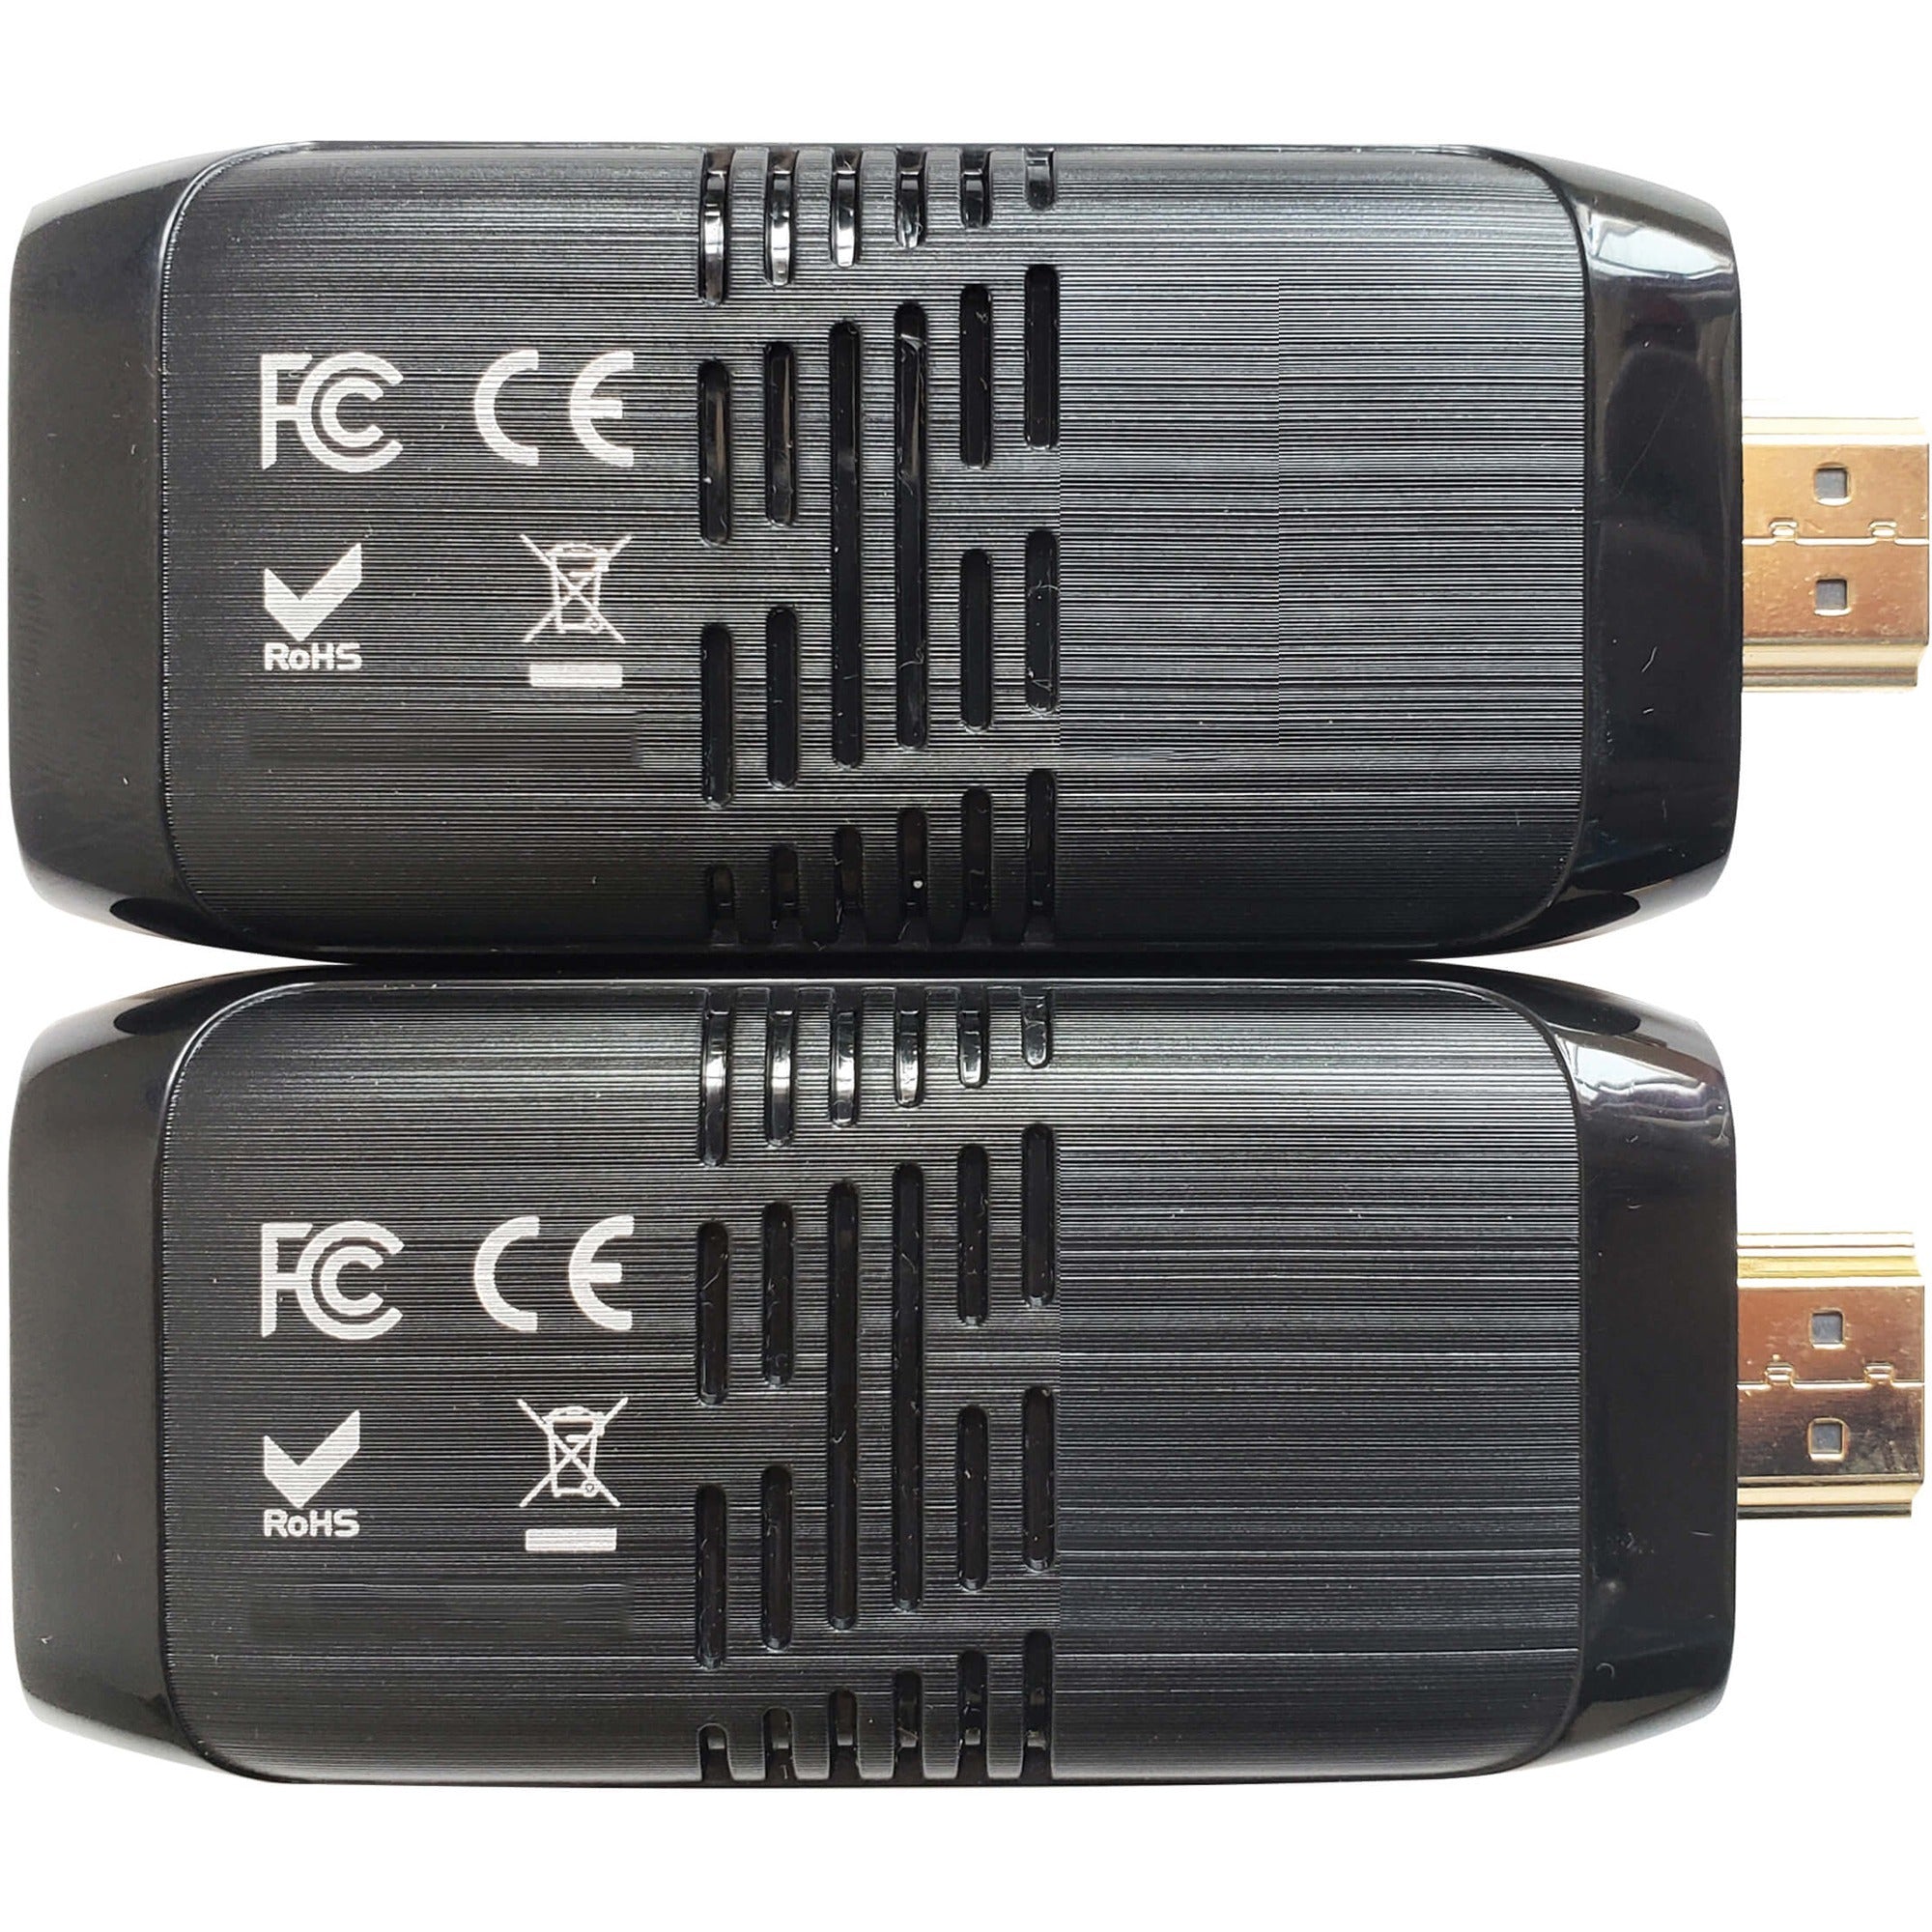 Mini Wireless HDMI Transmitter & Receiver Kit